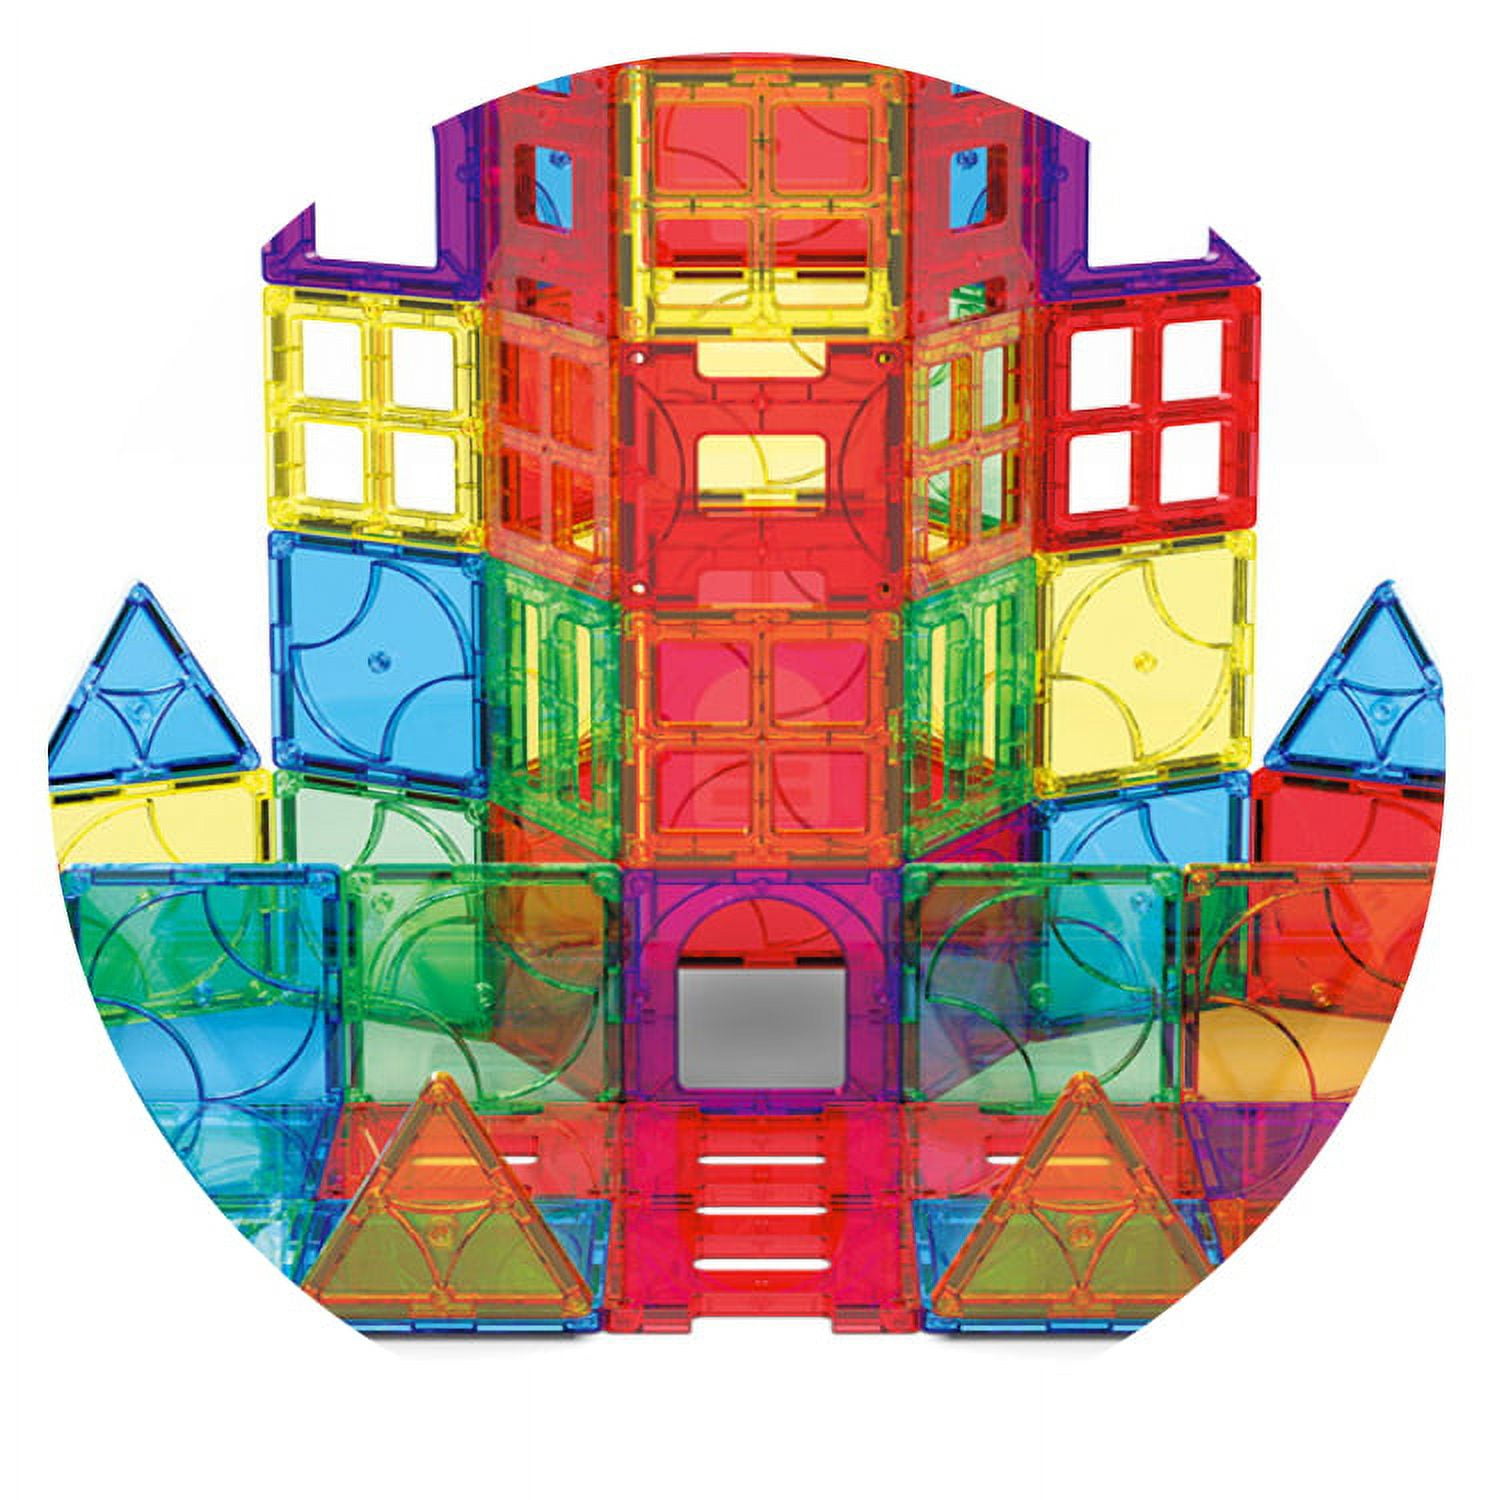 Blocs de construction magnétiques - multicolore - Kiabi - 17.90€